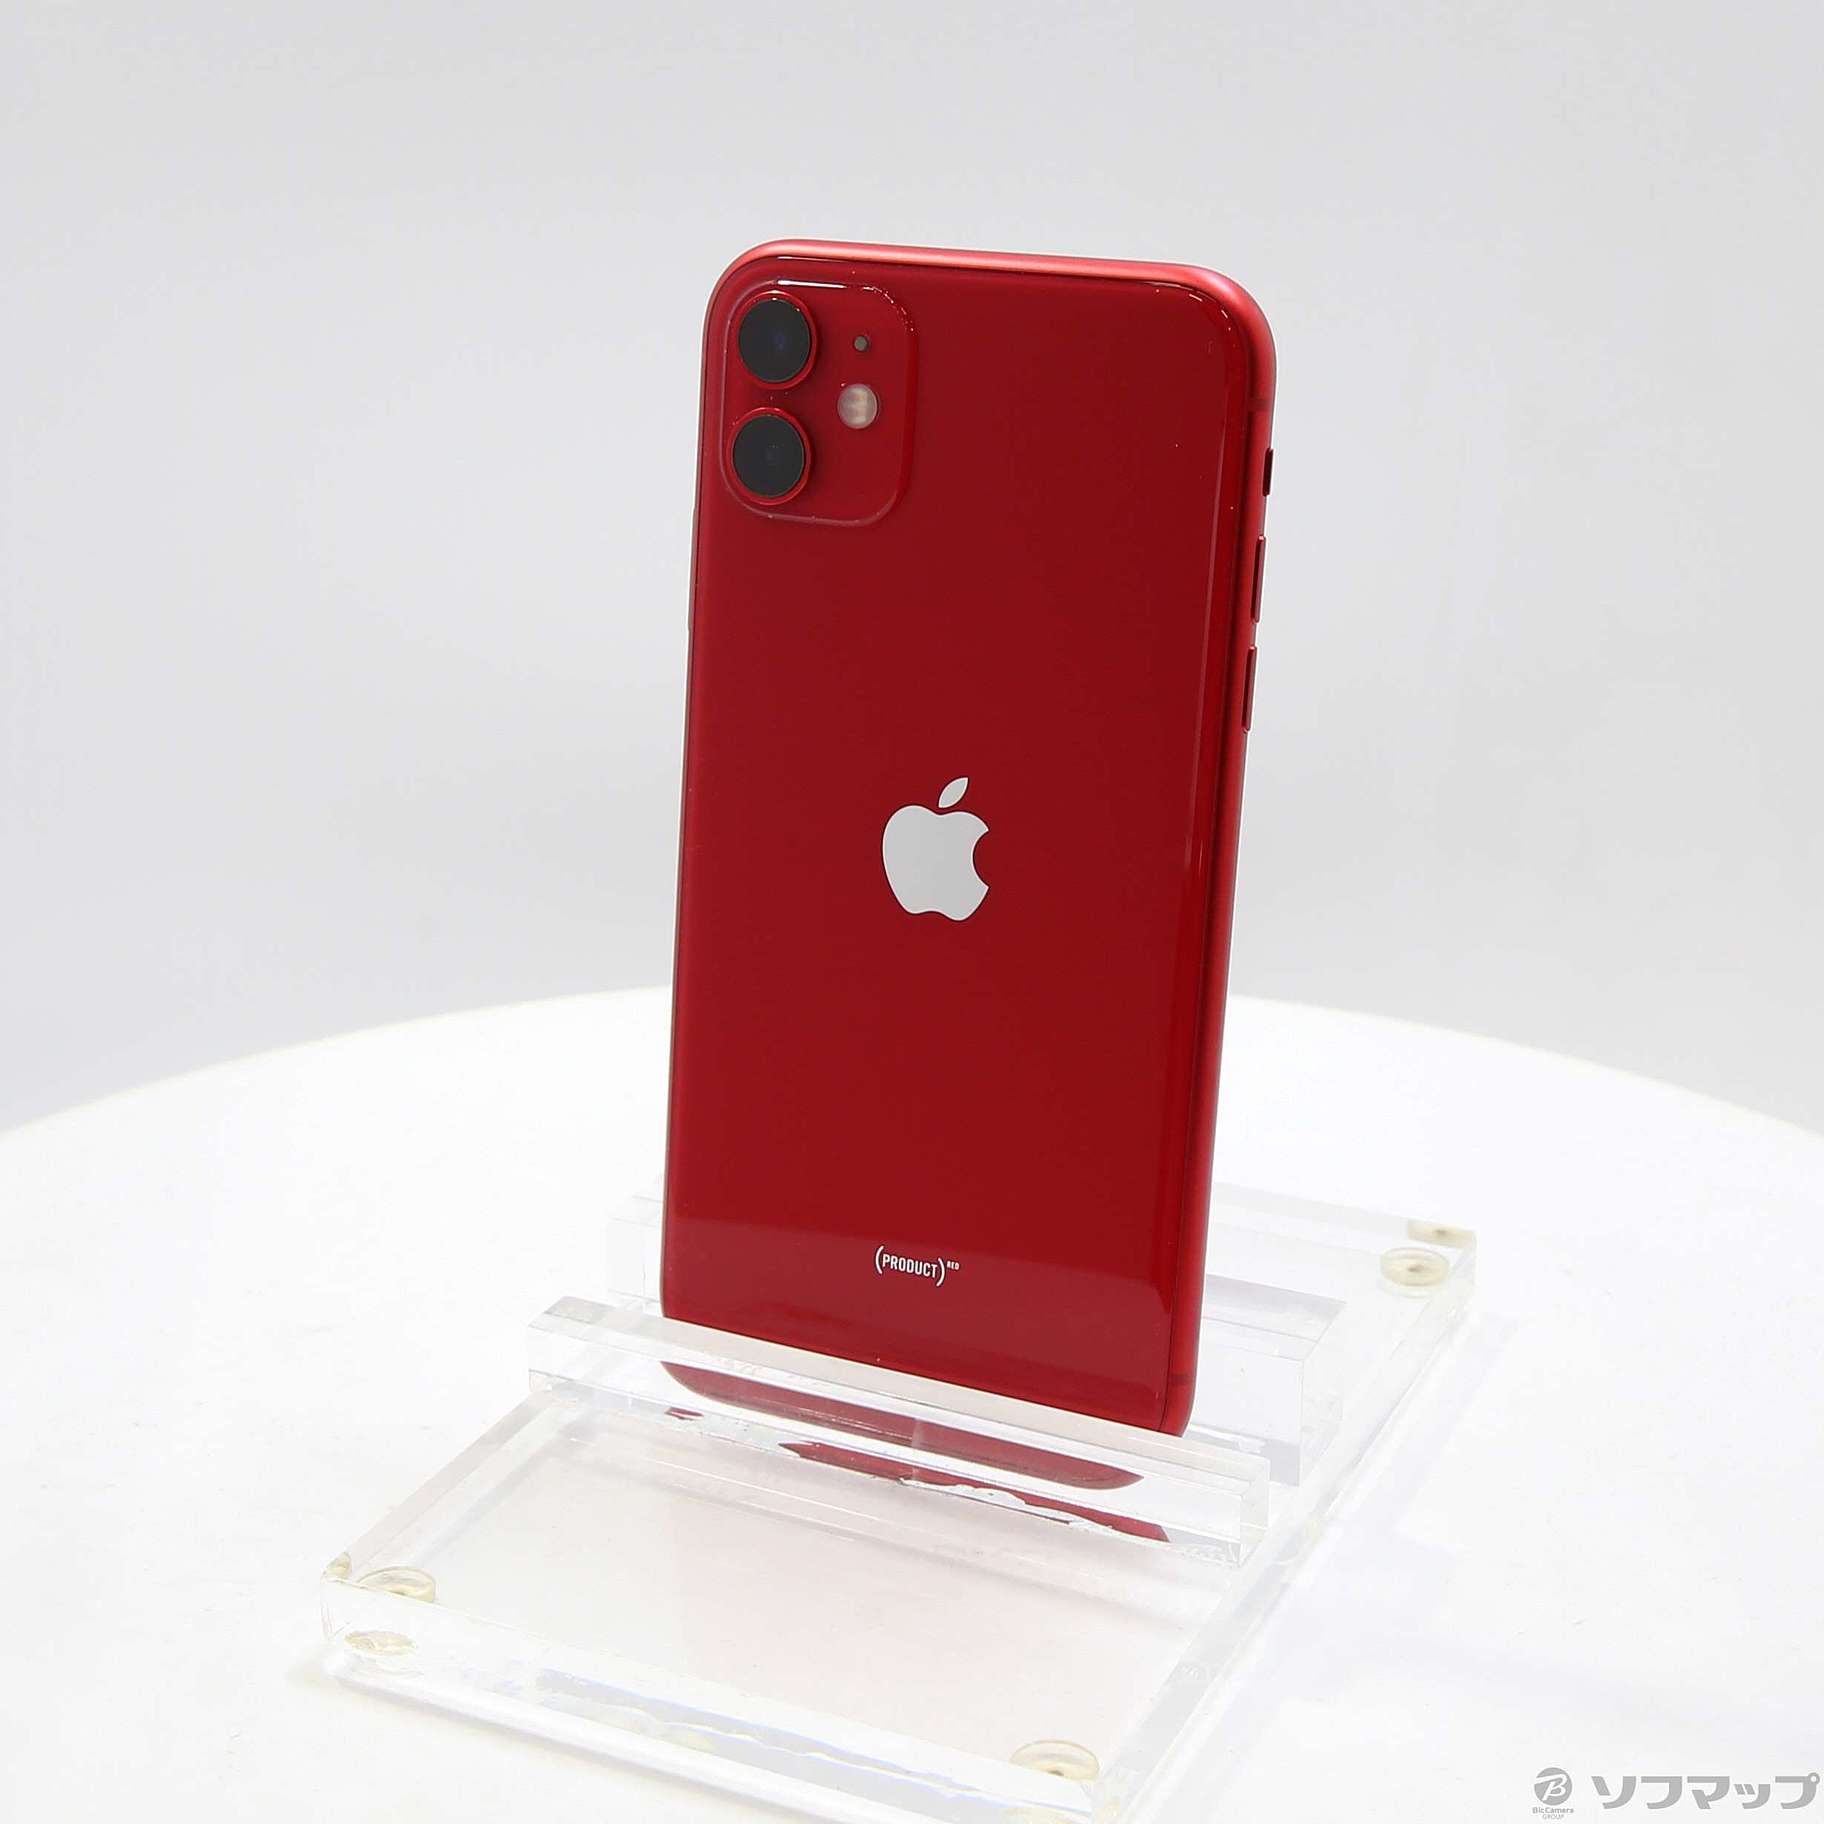 iPhone11 (PRODUCT)RED レッド 128GB SIMフリー - スマートフォン本体